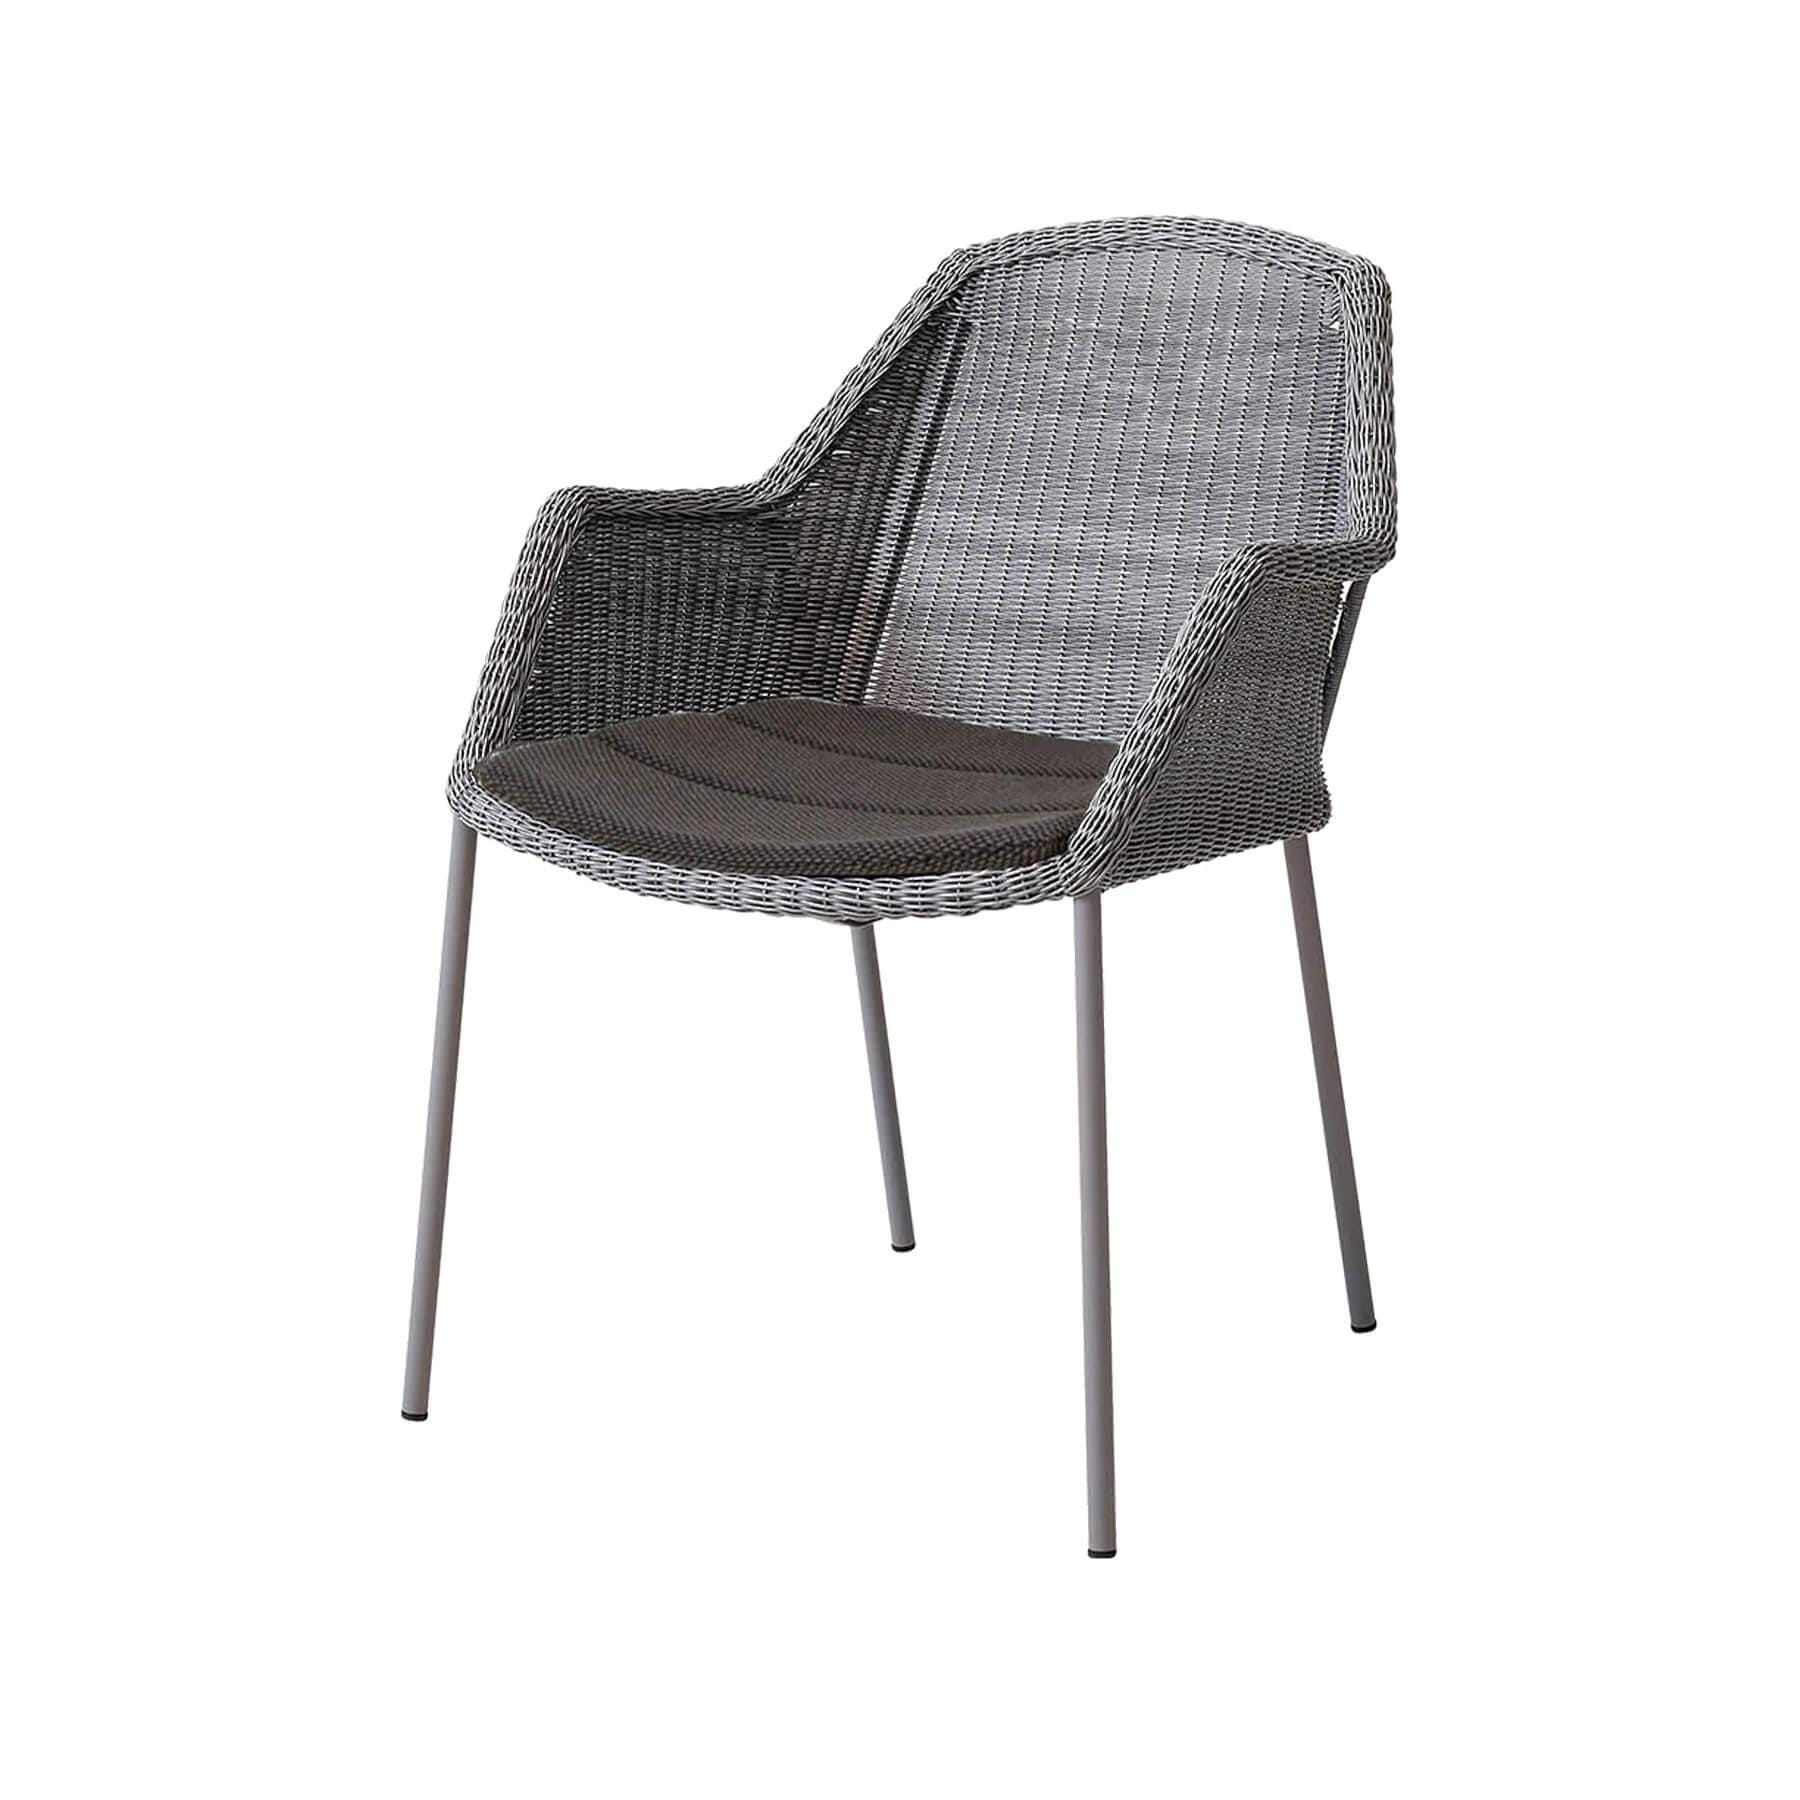 Caneline Breeze Outdoor Chair Light Grey Seat Dark Grey Cushion